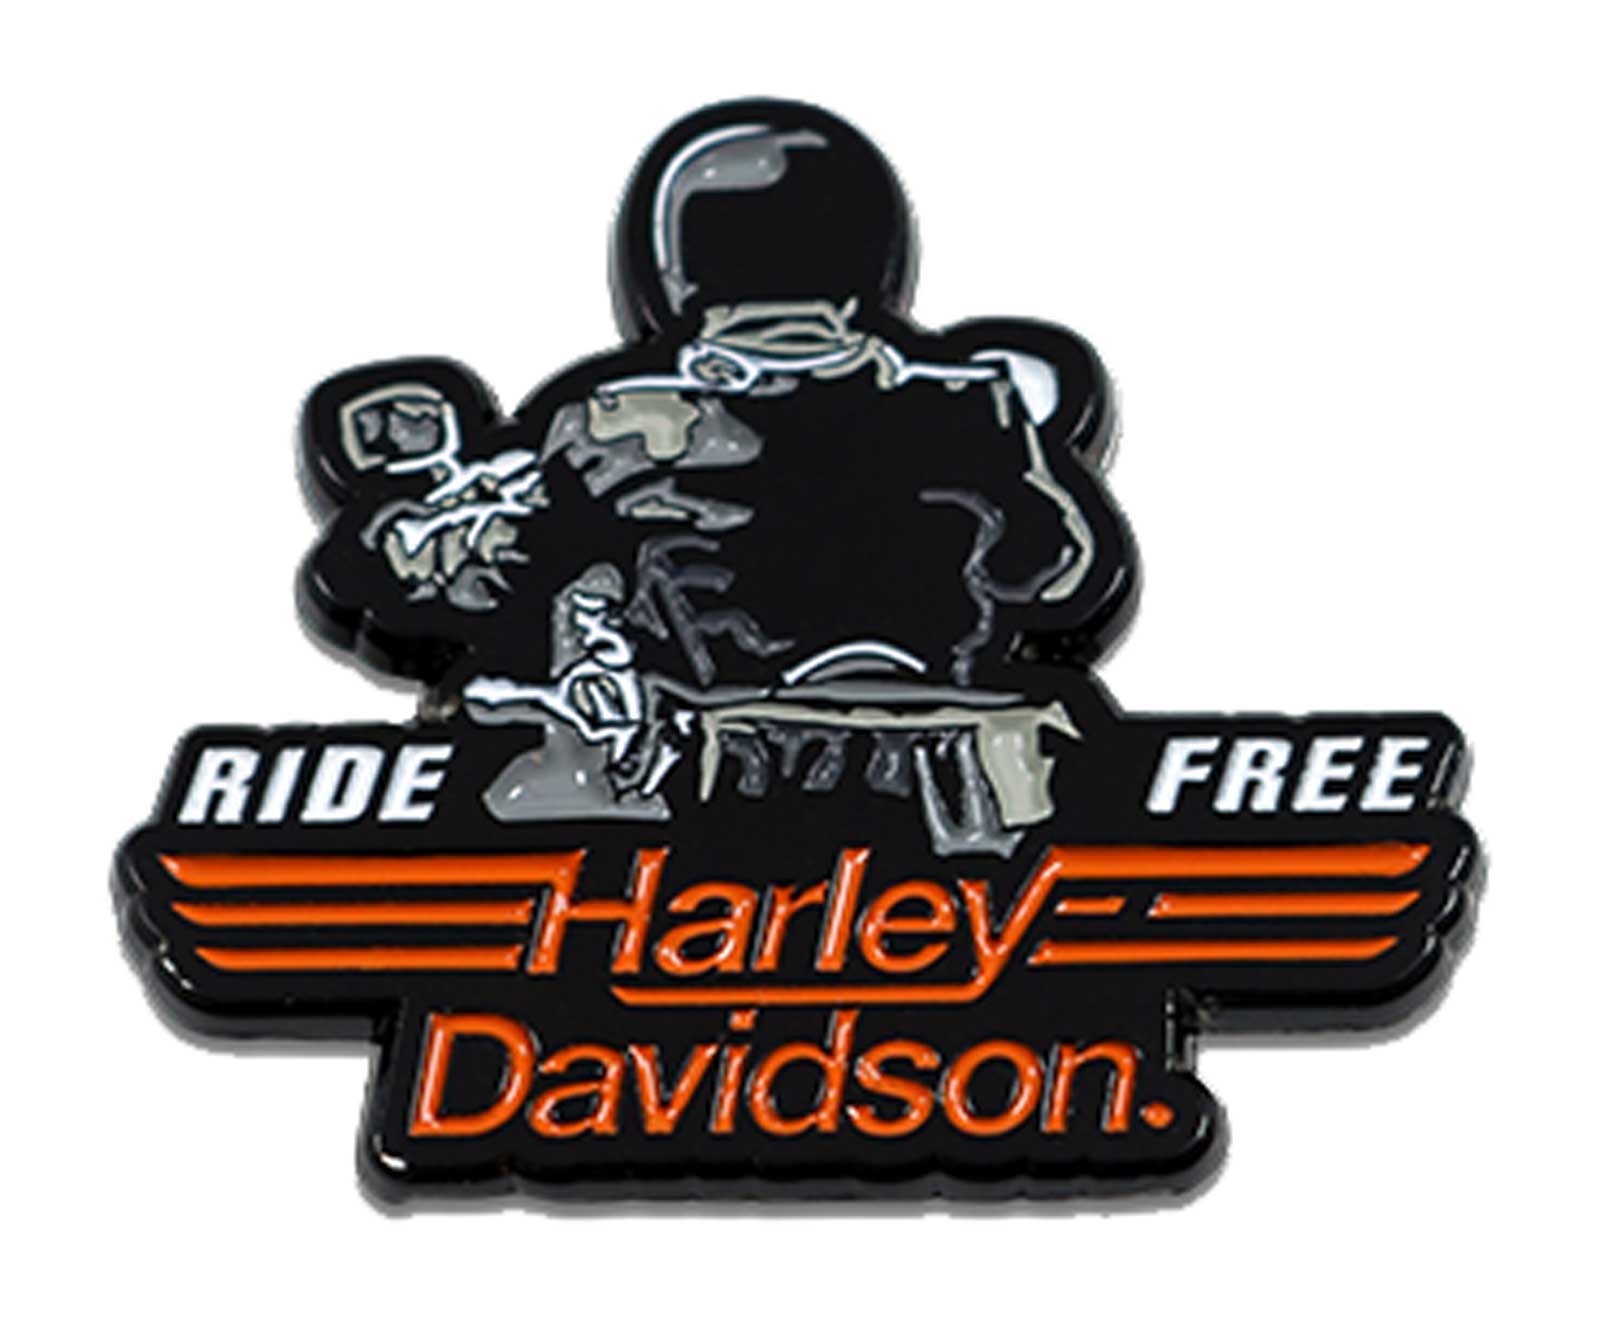 Harley Davidson Patchvariousharleypatchesjewelrybiker